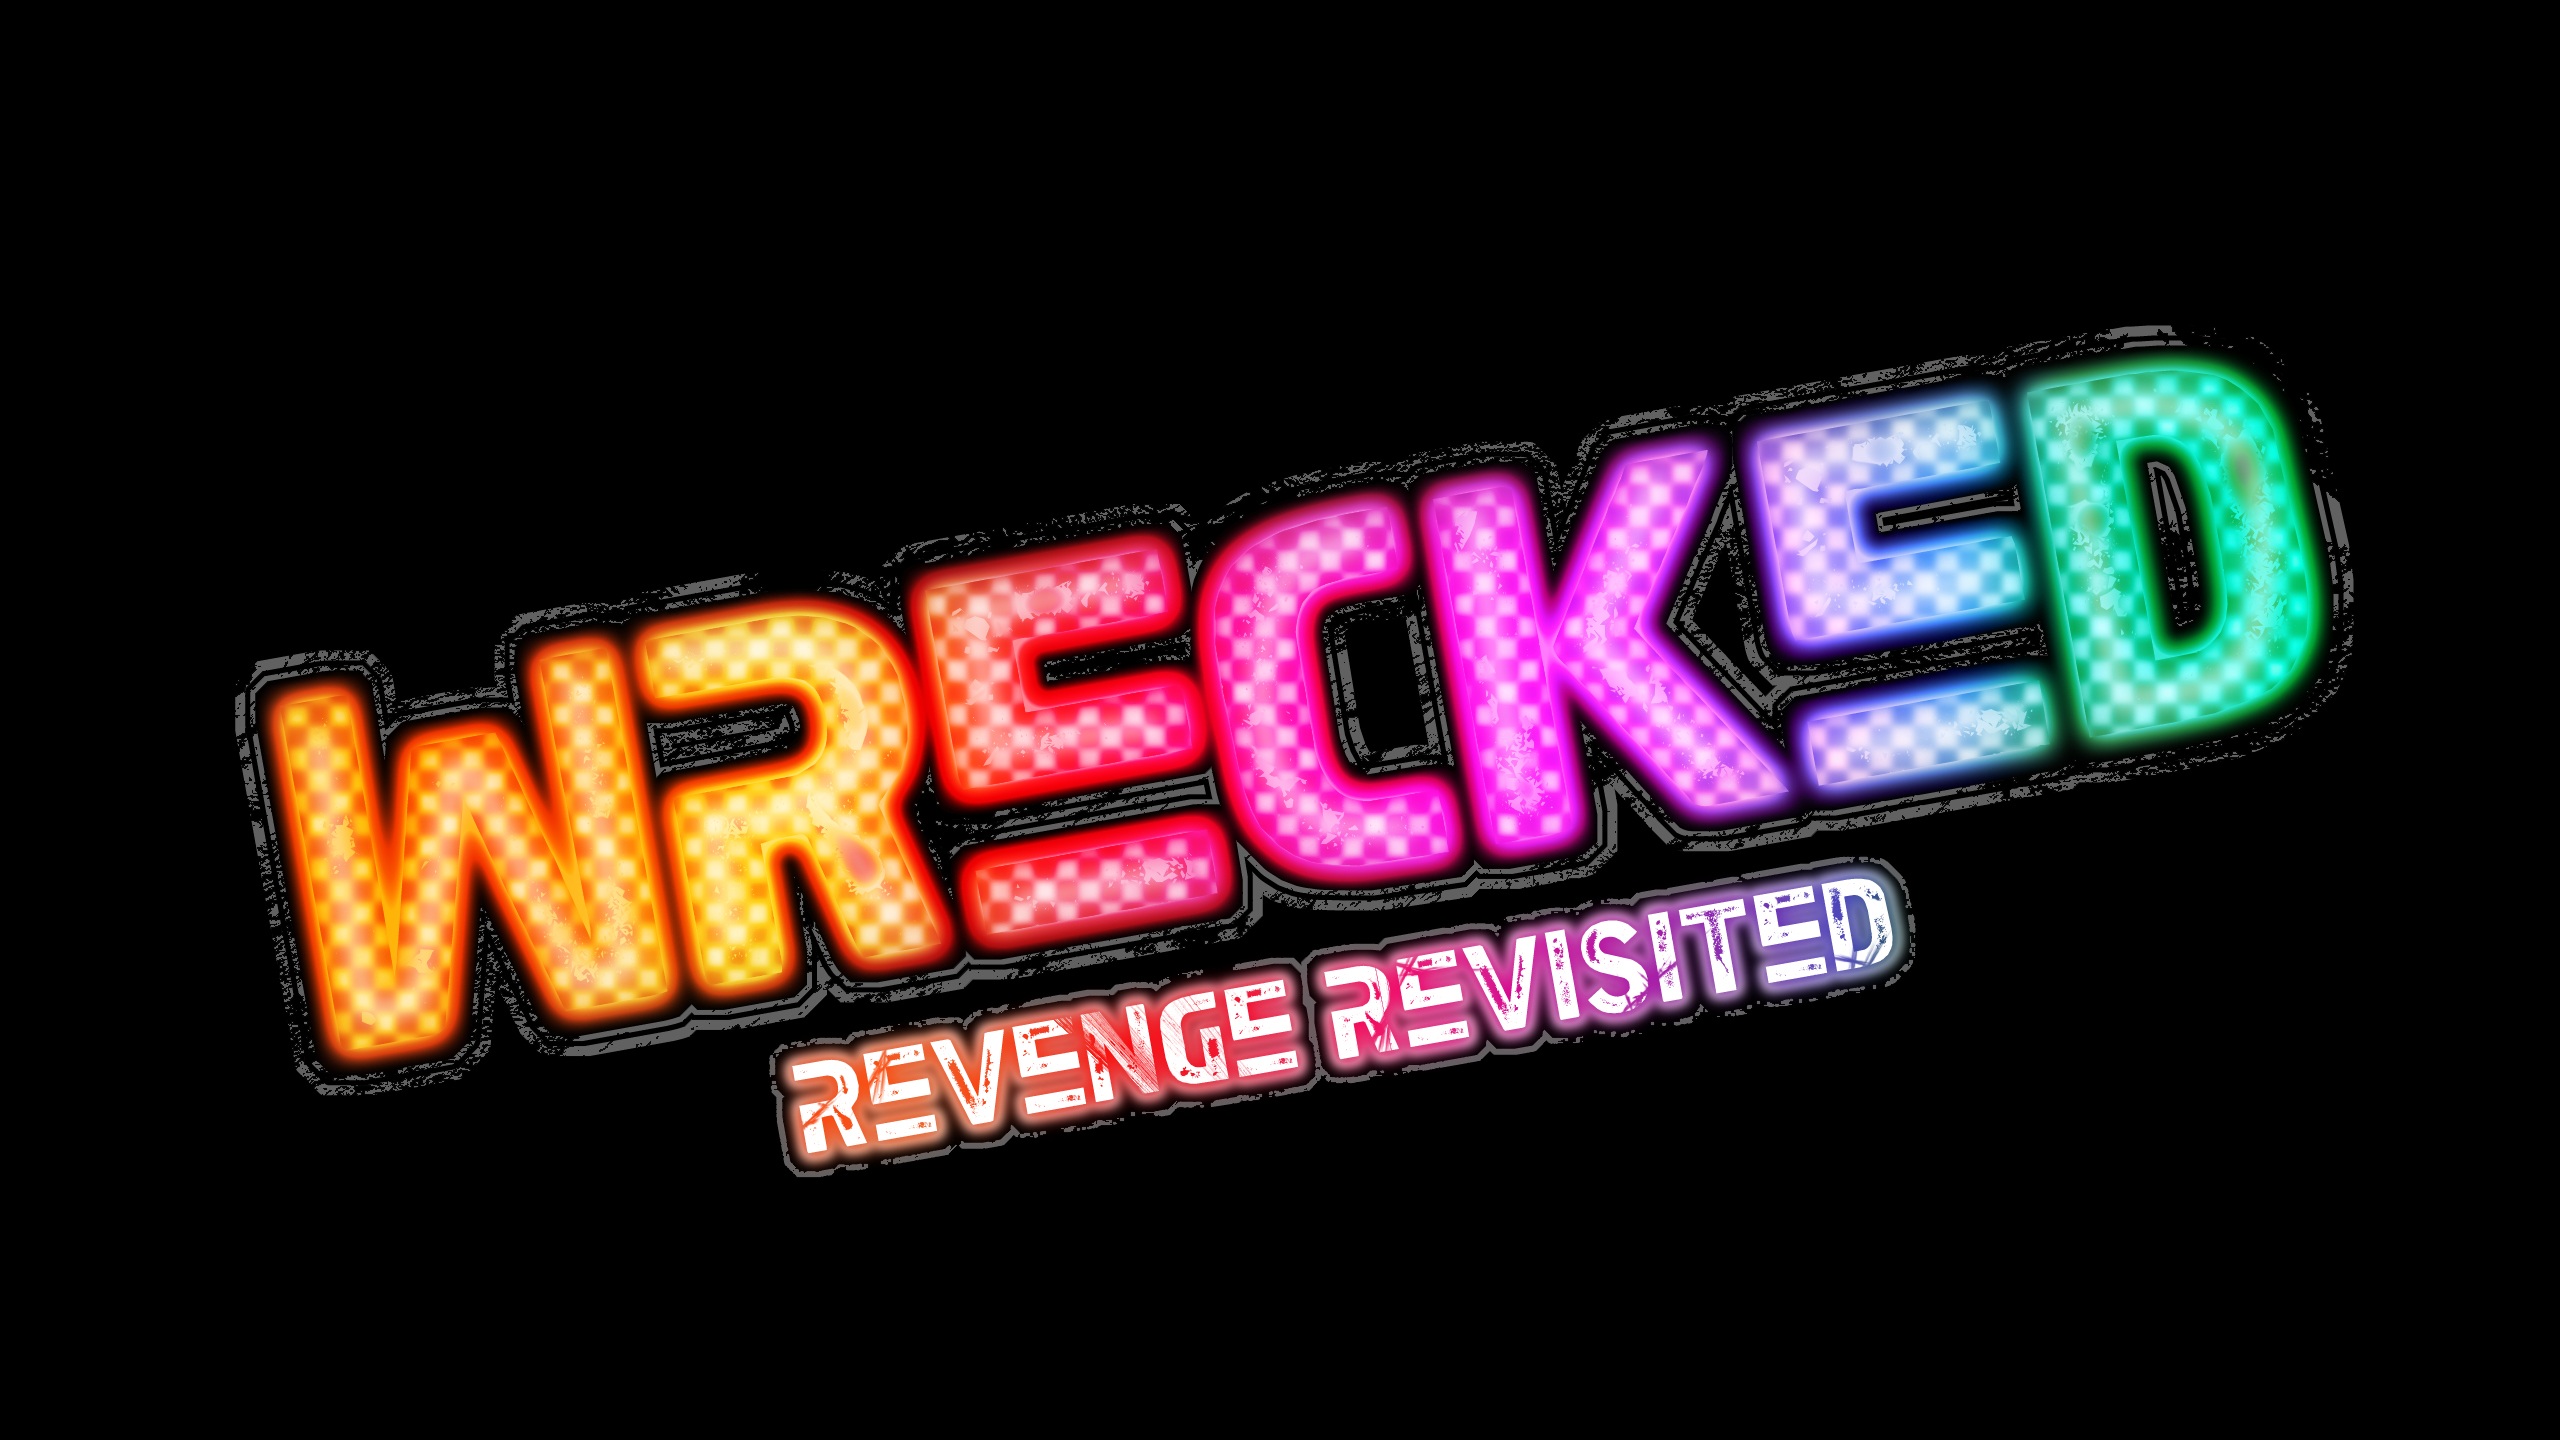 Wrecked: Revenge Revisited passes Microsoft certification